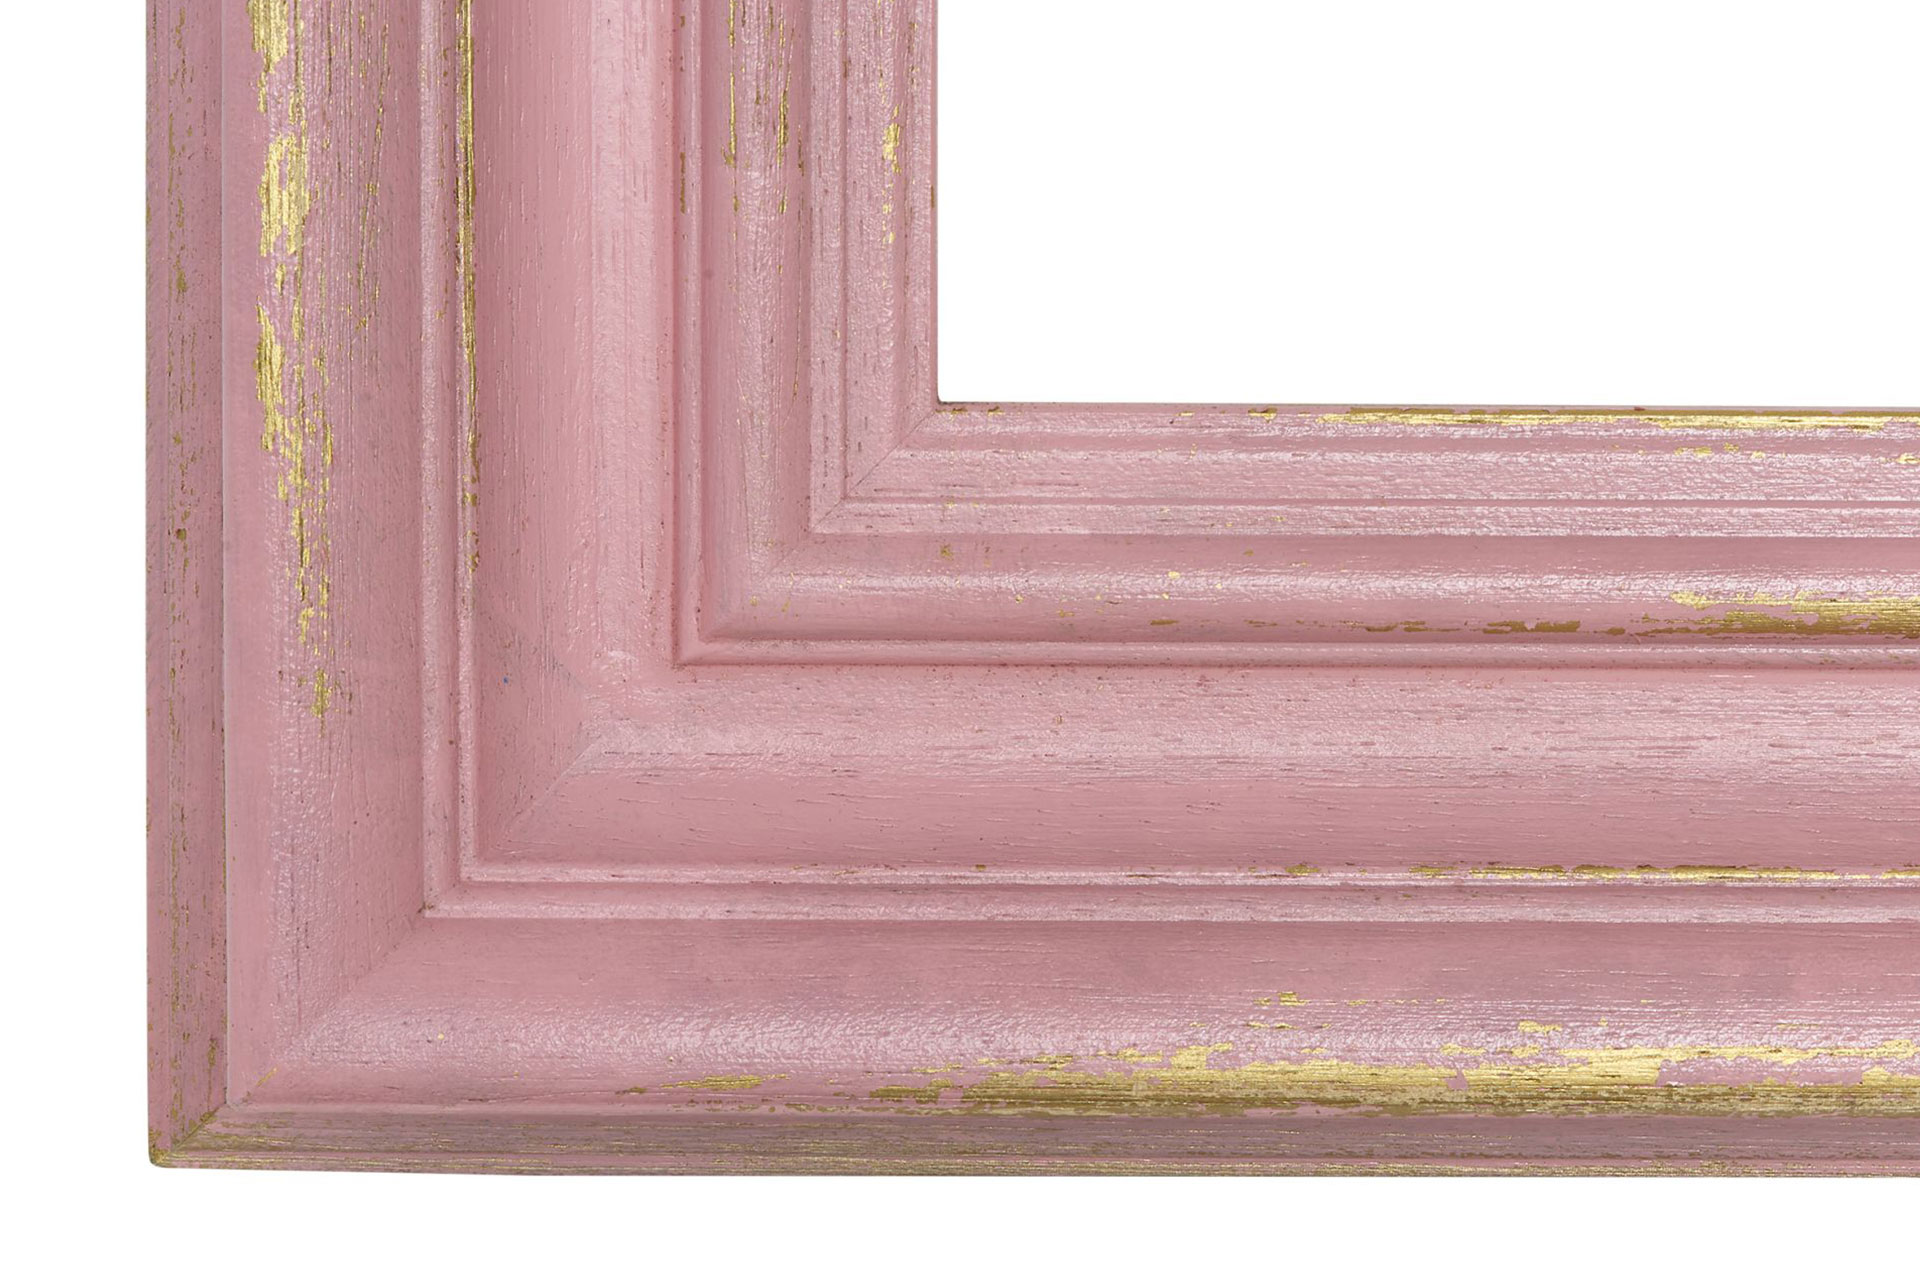 Wandspiegel Modell Rochefort, Gold/Rosa, Gold/Weiß, Form: rechteckig Herstellung: by ASR-Rahmendesign Material: Holz, Wandspiegel, Shabby-Chic, Ansicht Ecke